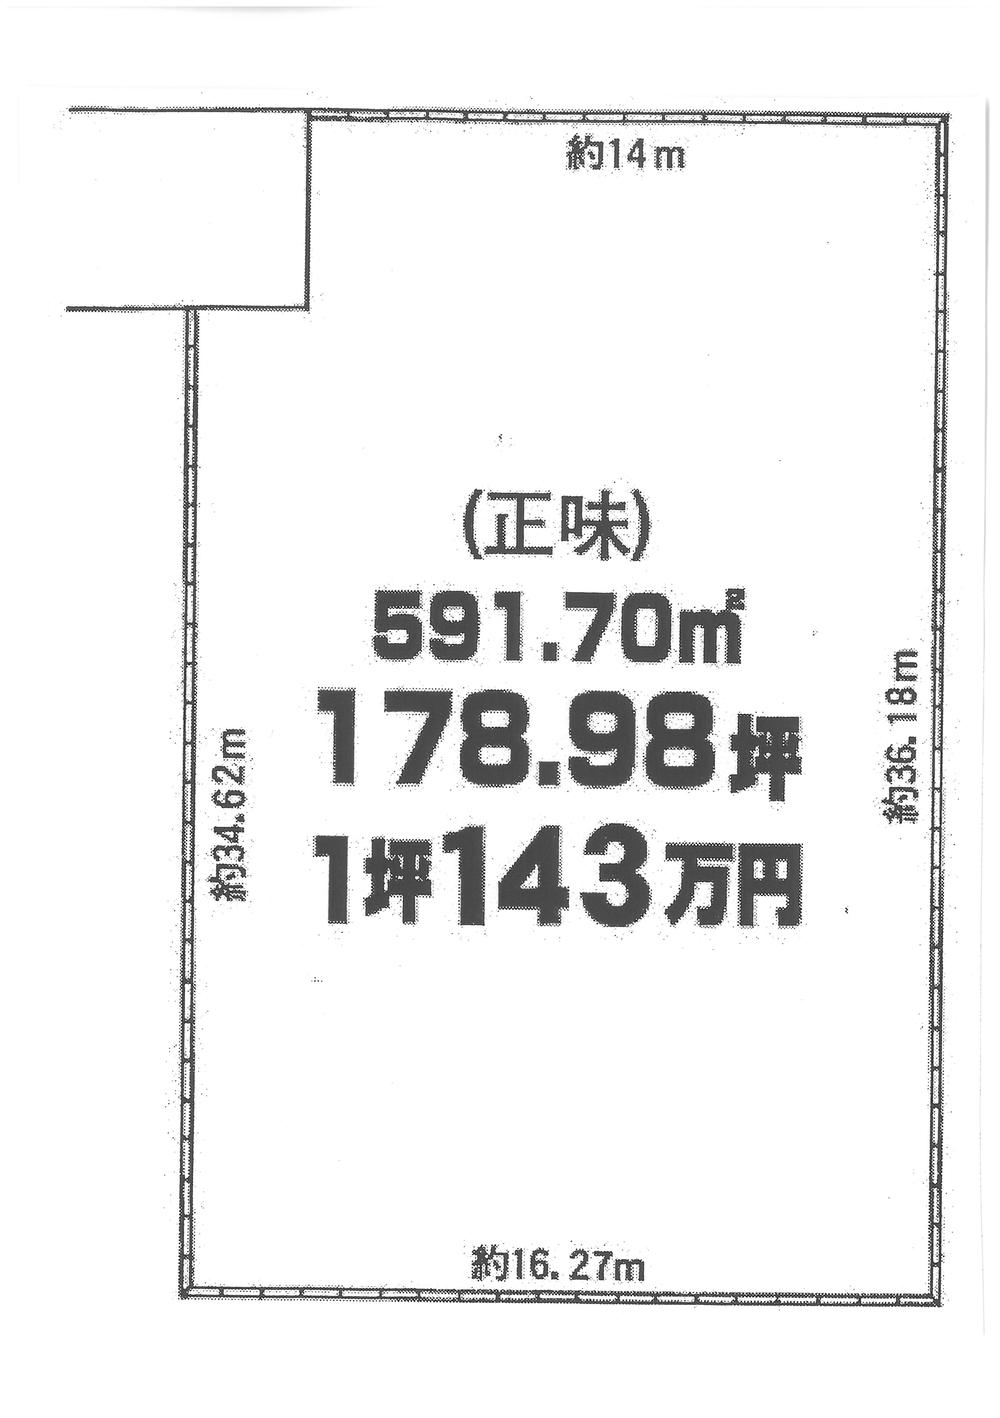 Compartment figure. Land price 257 million yen, Land area 591.7 sq m